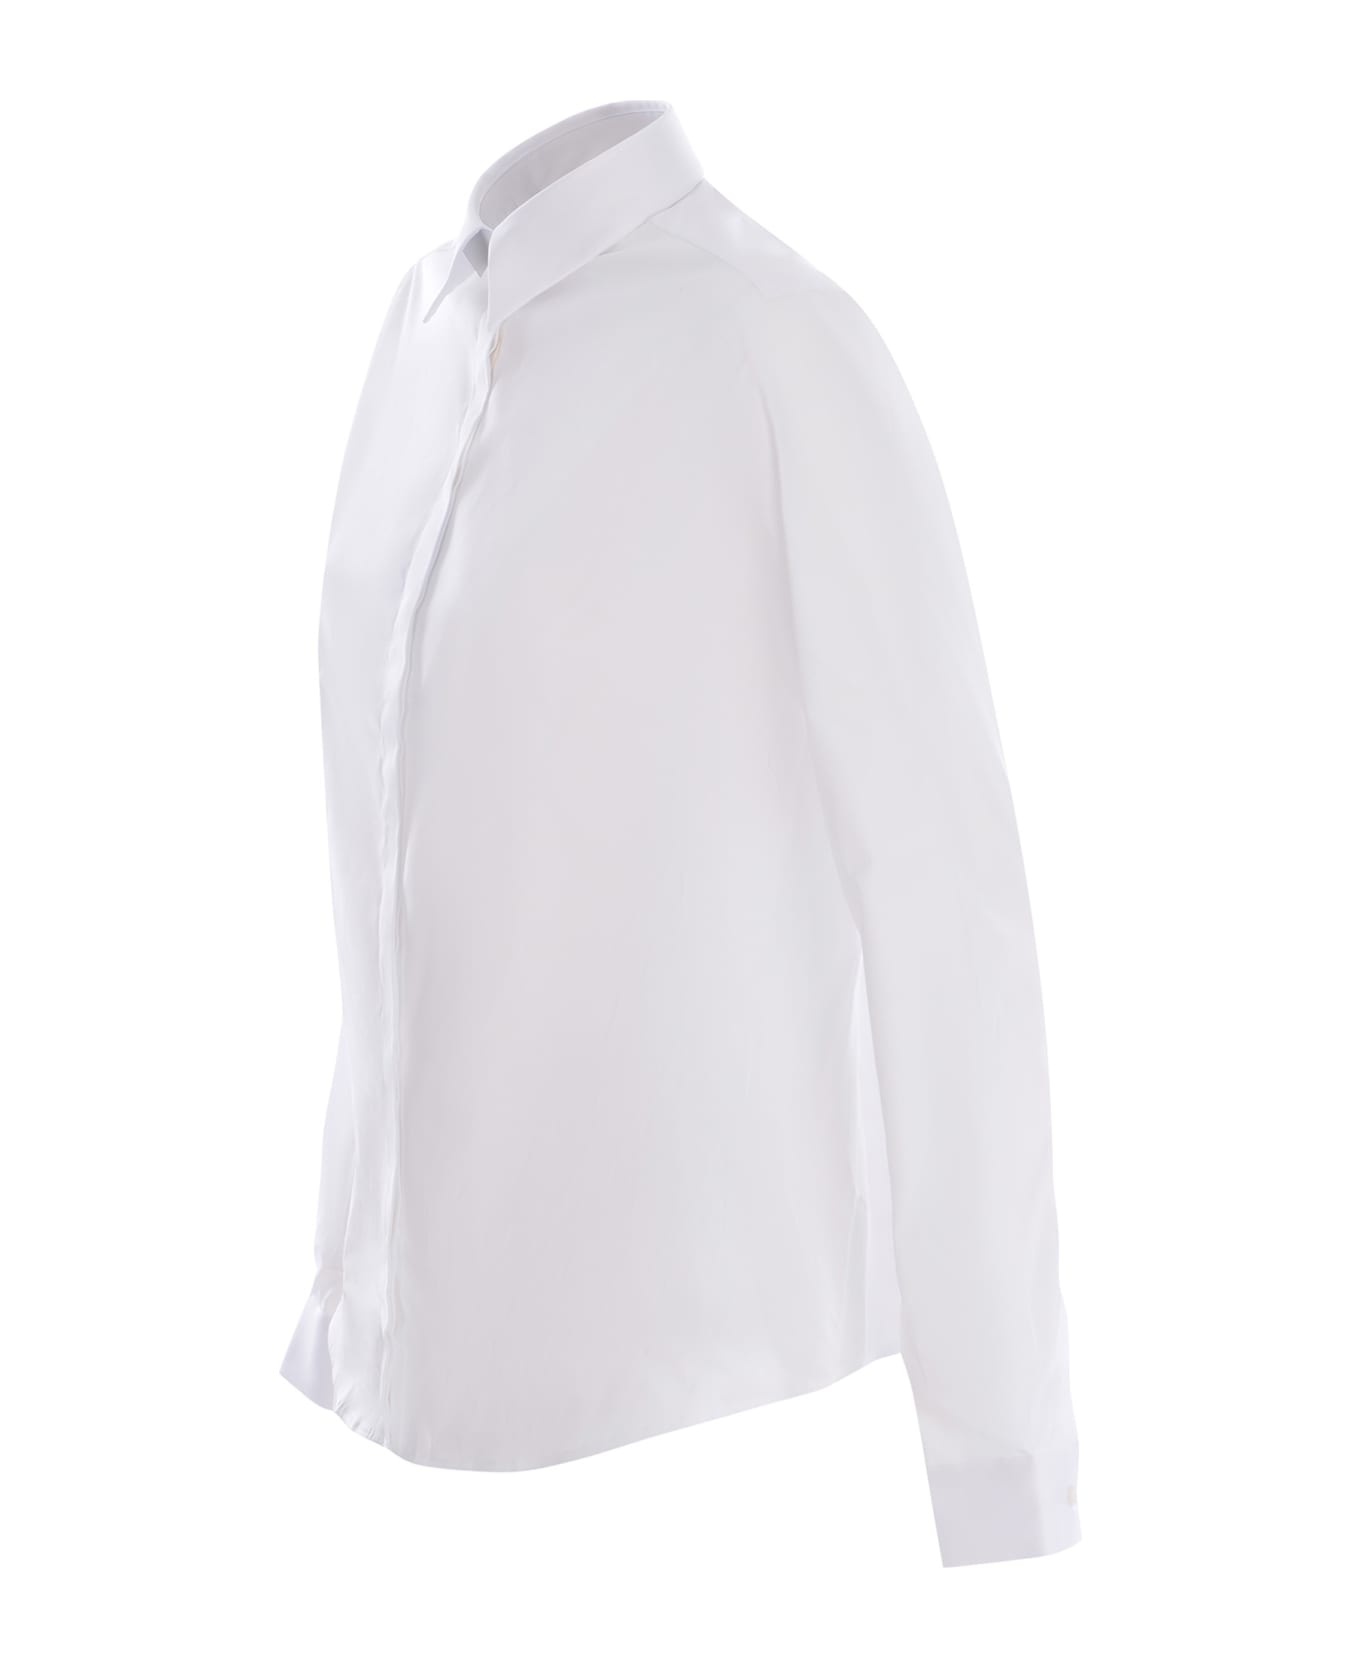 Fay Shirt Fay Made Of Stretch Cotton Poplin - Bianco